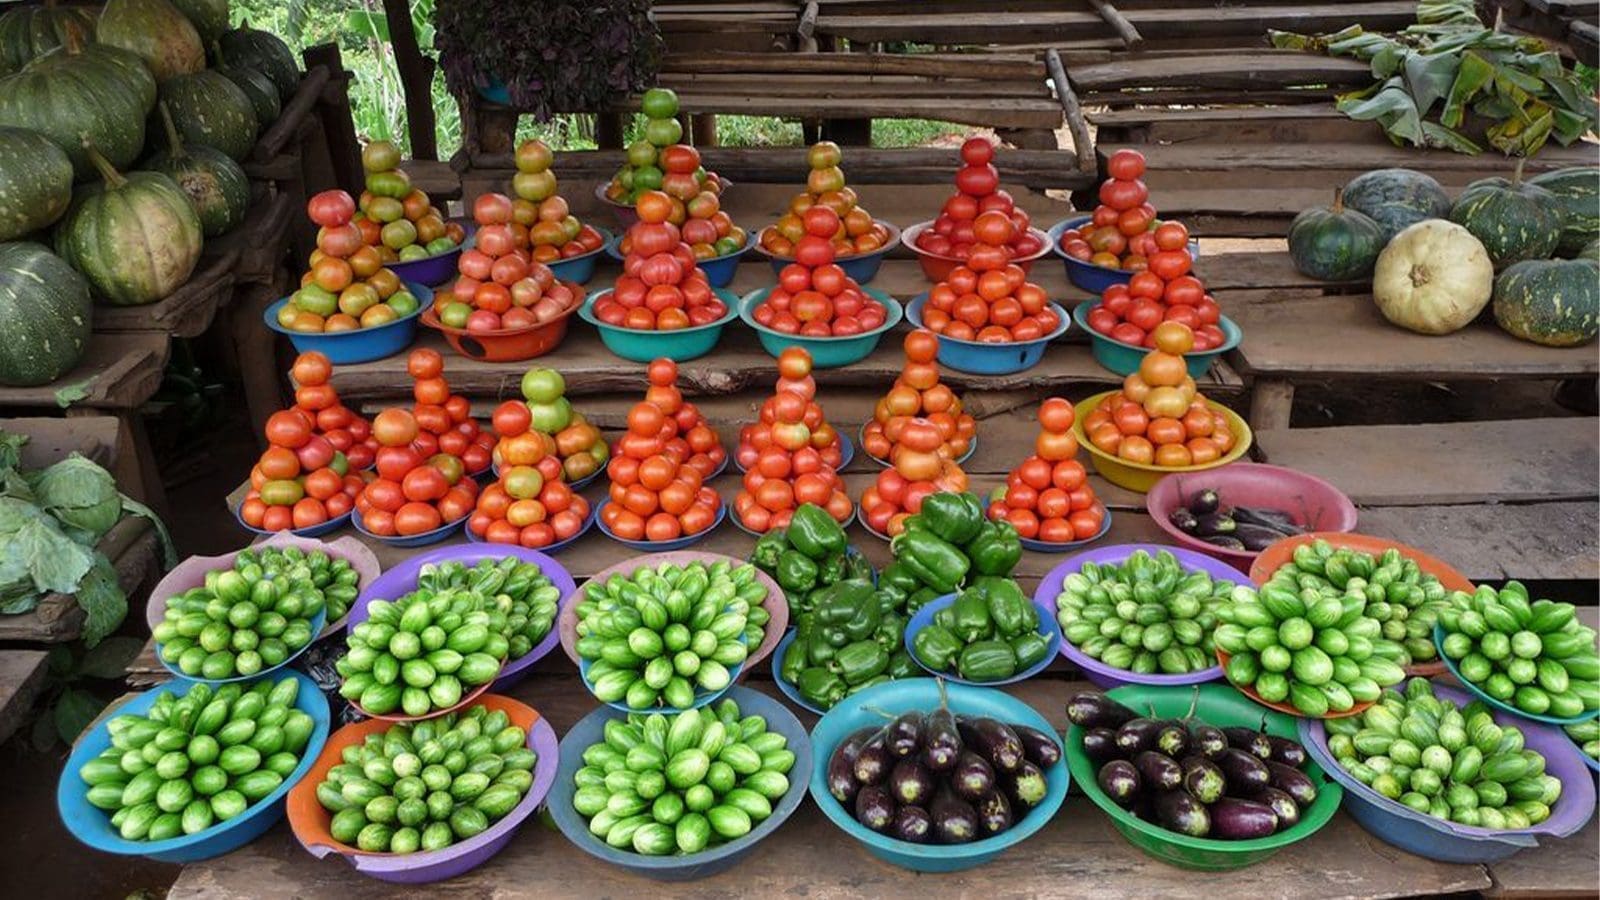 Ugandan study reveals alarming pesticide residues in fruits and vegetables, prompting urgent calls for regulation